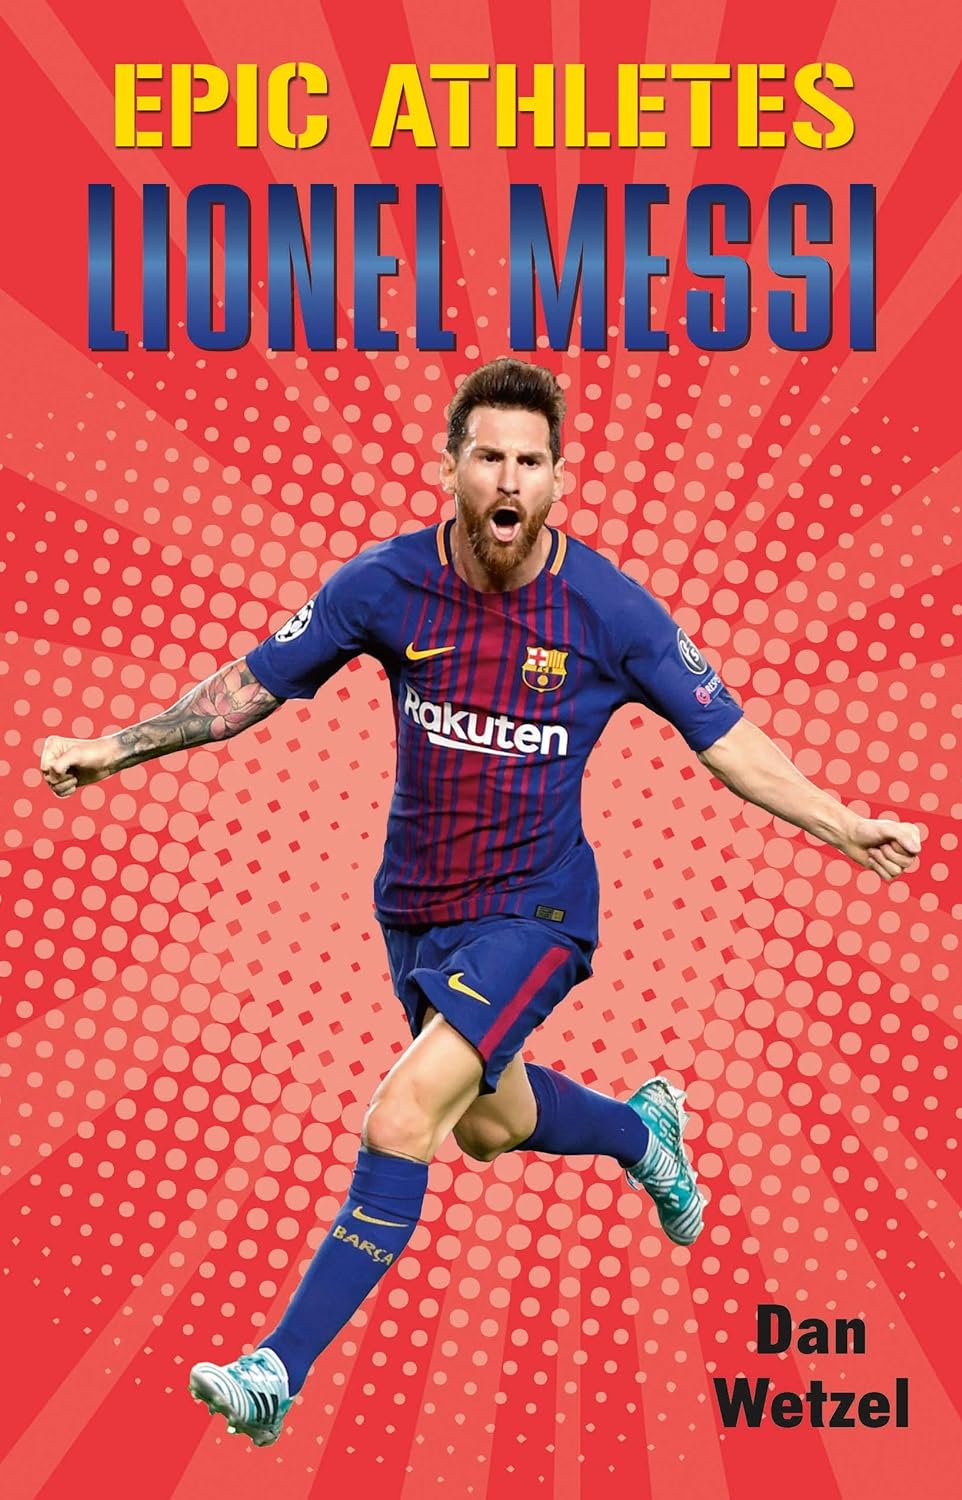 Epic Athletes - Lionel Messi (Epic Athletes 6) - NJ Corrections Book Store